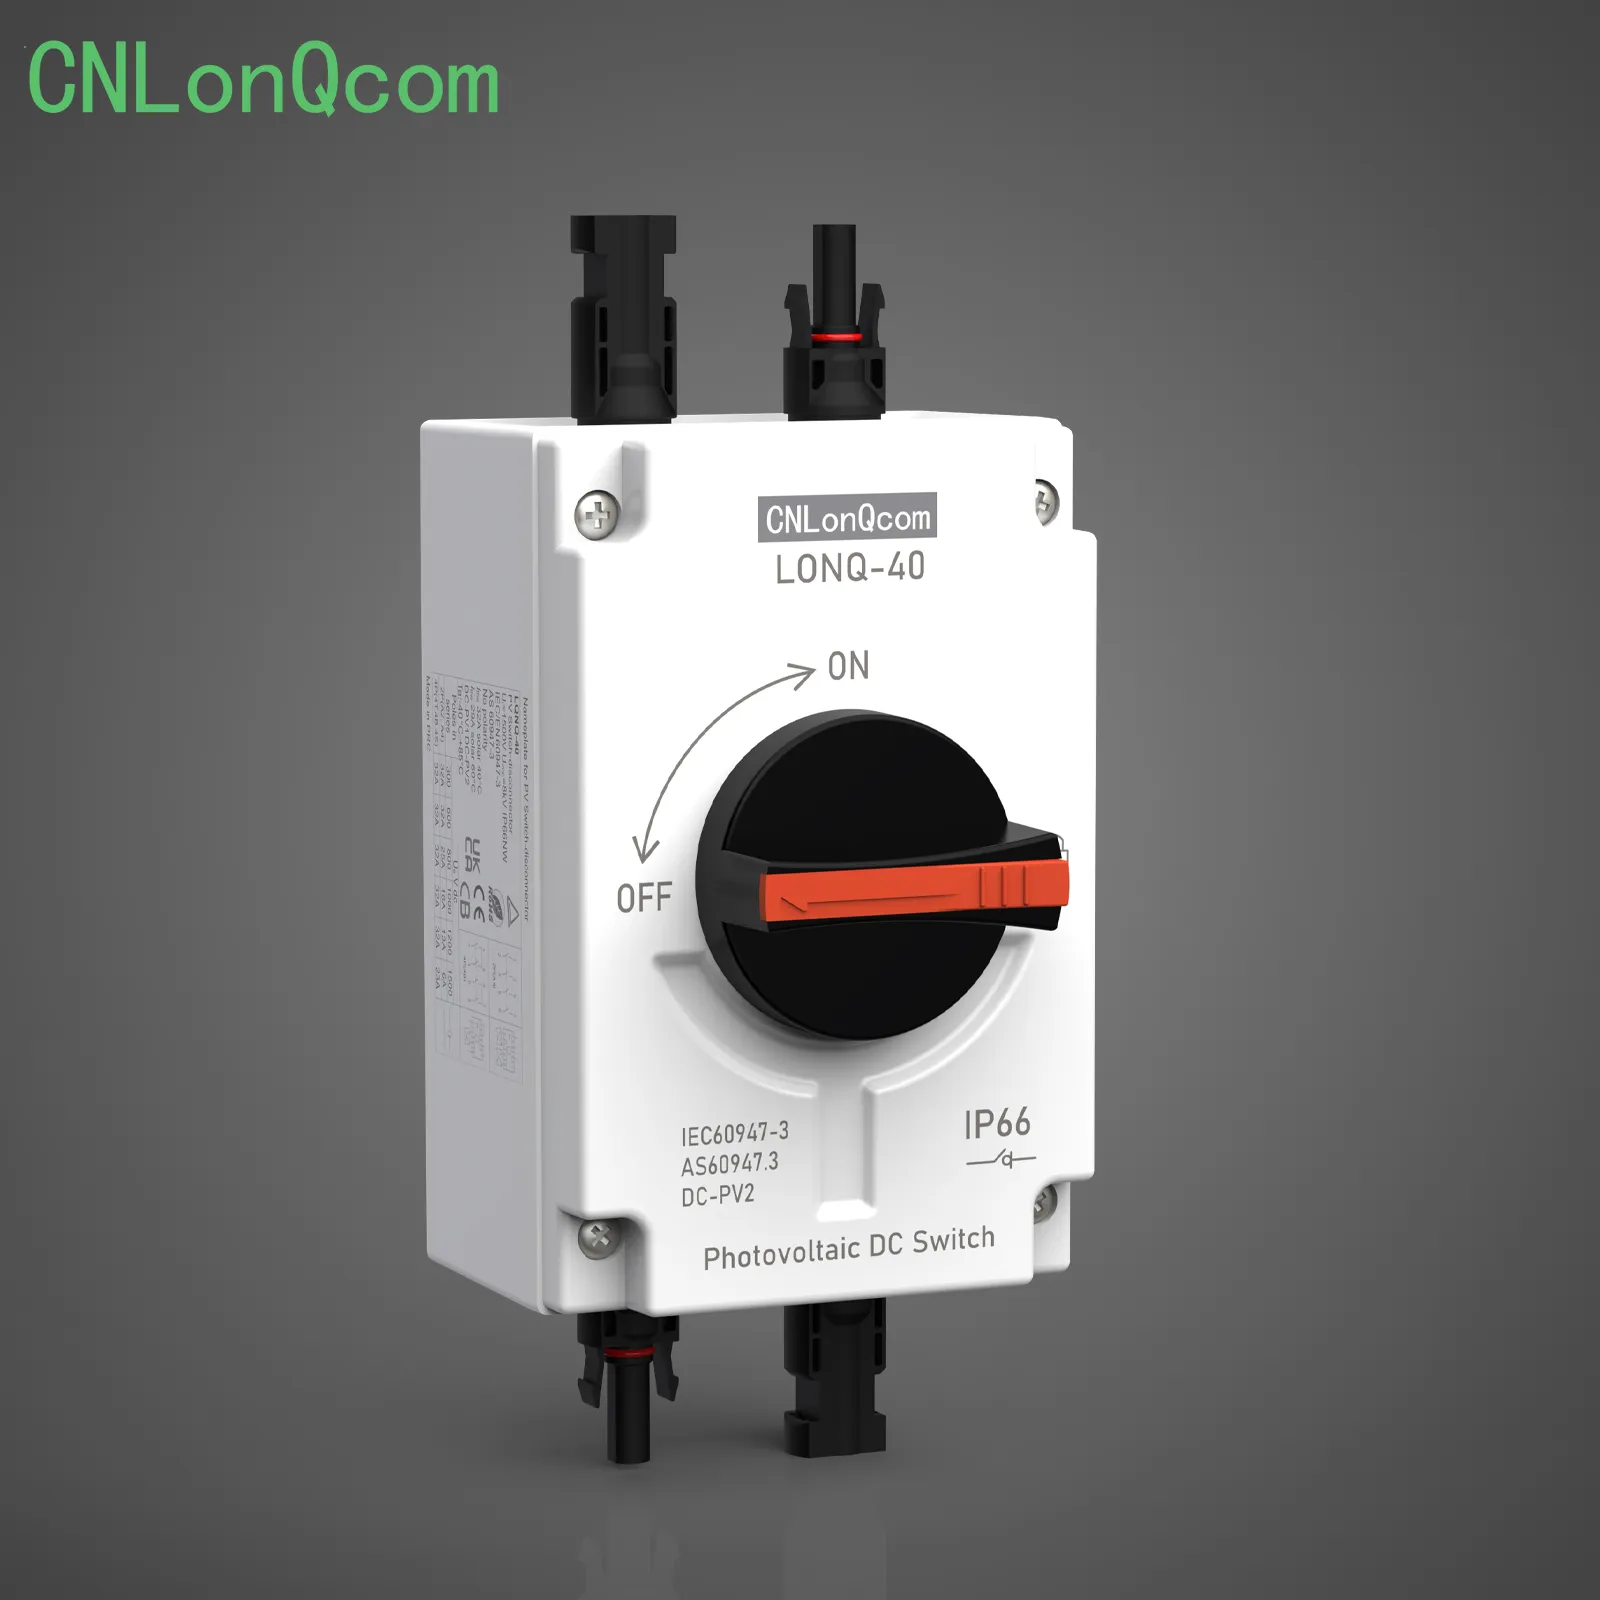 CNLonQcom Menampilkan Saklar Isolator dalam Video Baru